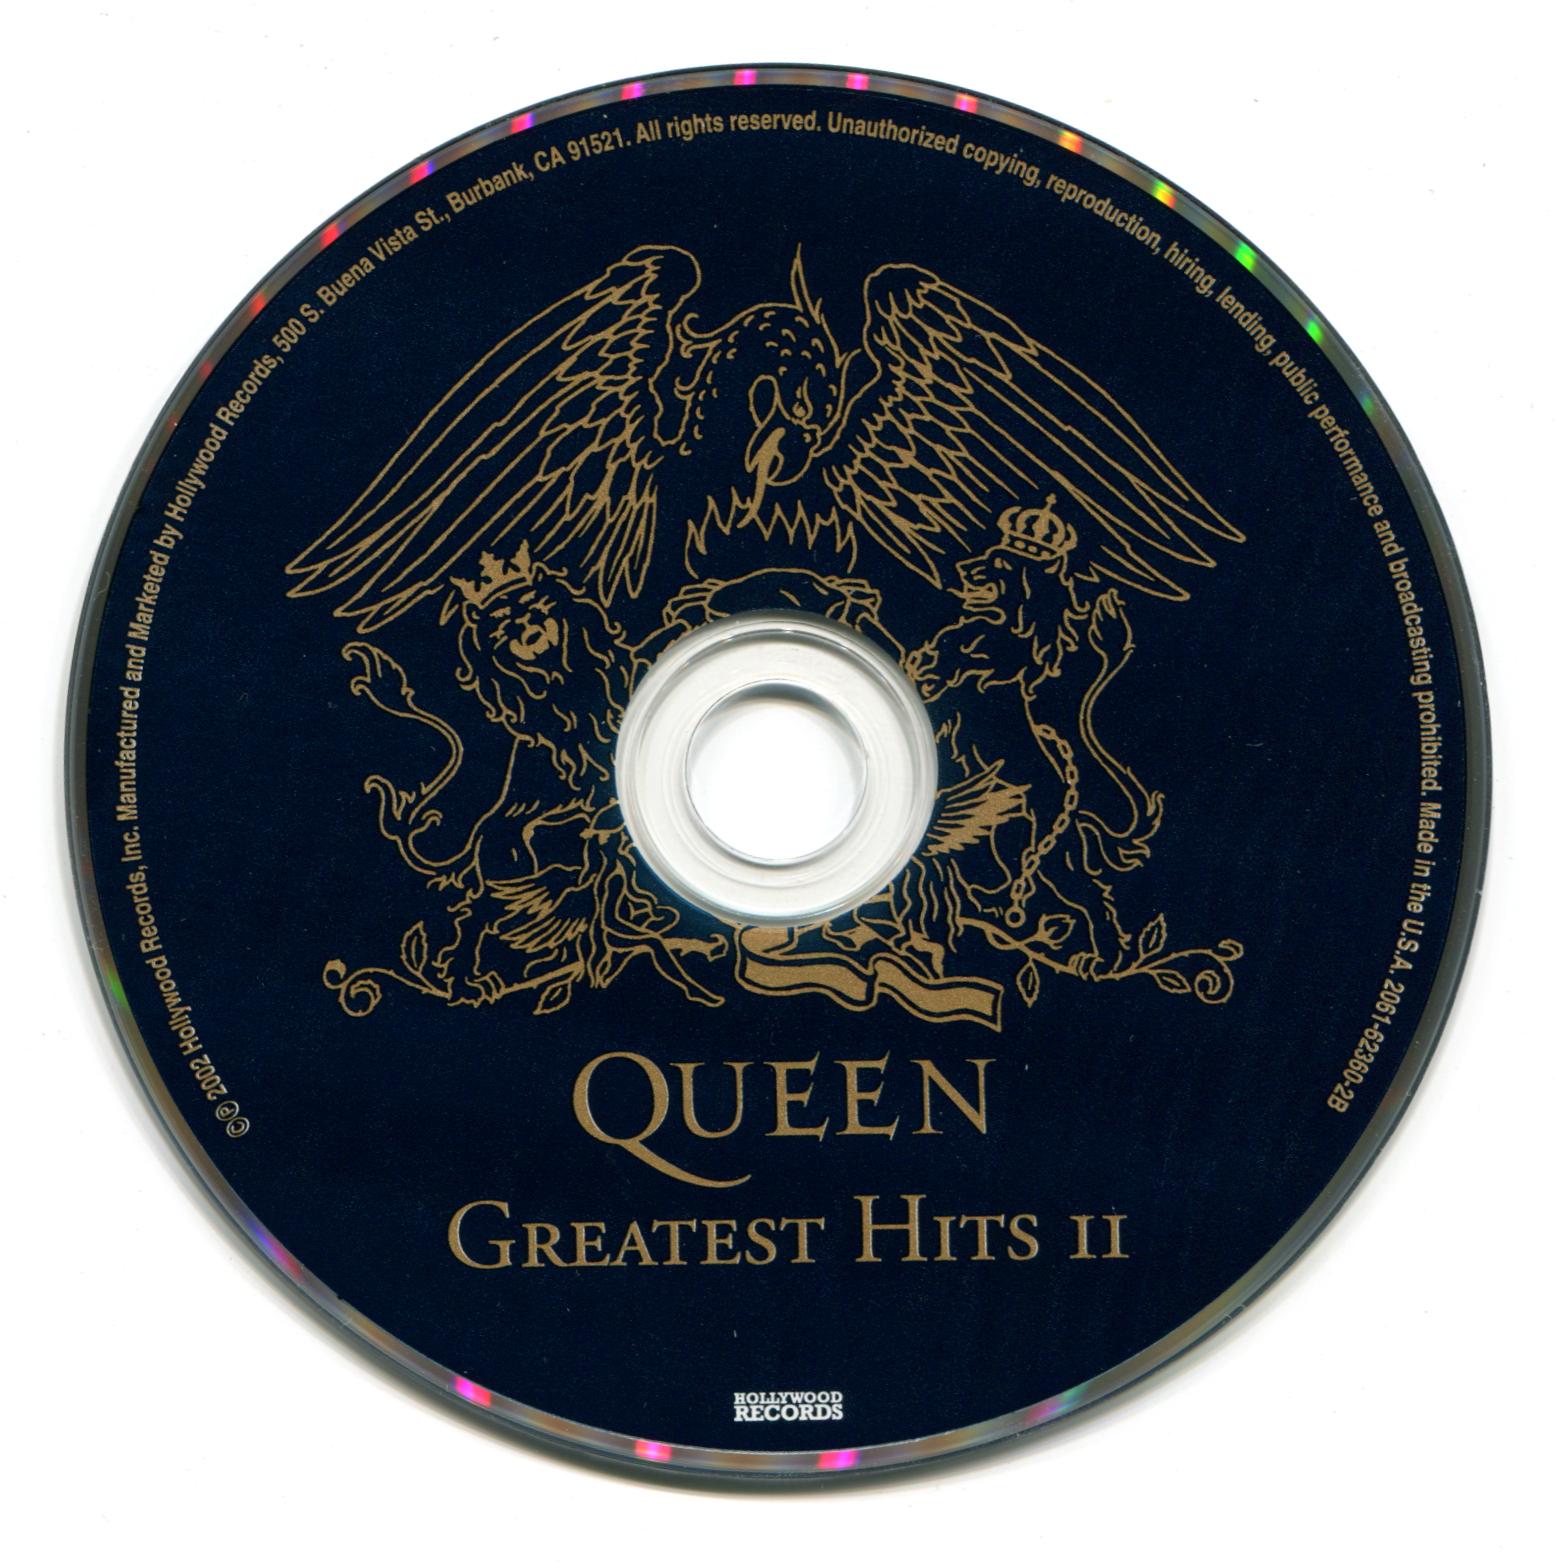 Queen best hits. Queen Greatest Hits 1 2 3 Platinum collection. "The Greatest Hits" Queen Касетта обложка. Queen Greatest Hits 1981 CD. Квин платинум коллекшн.